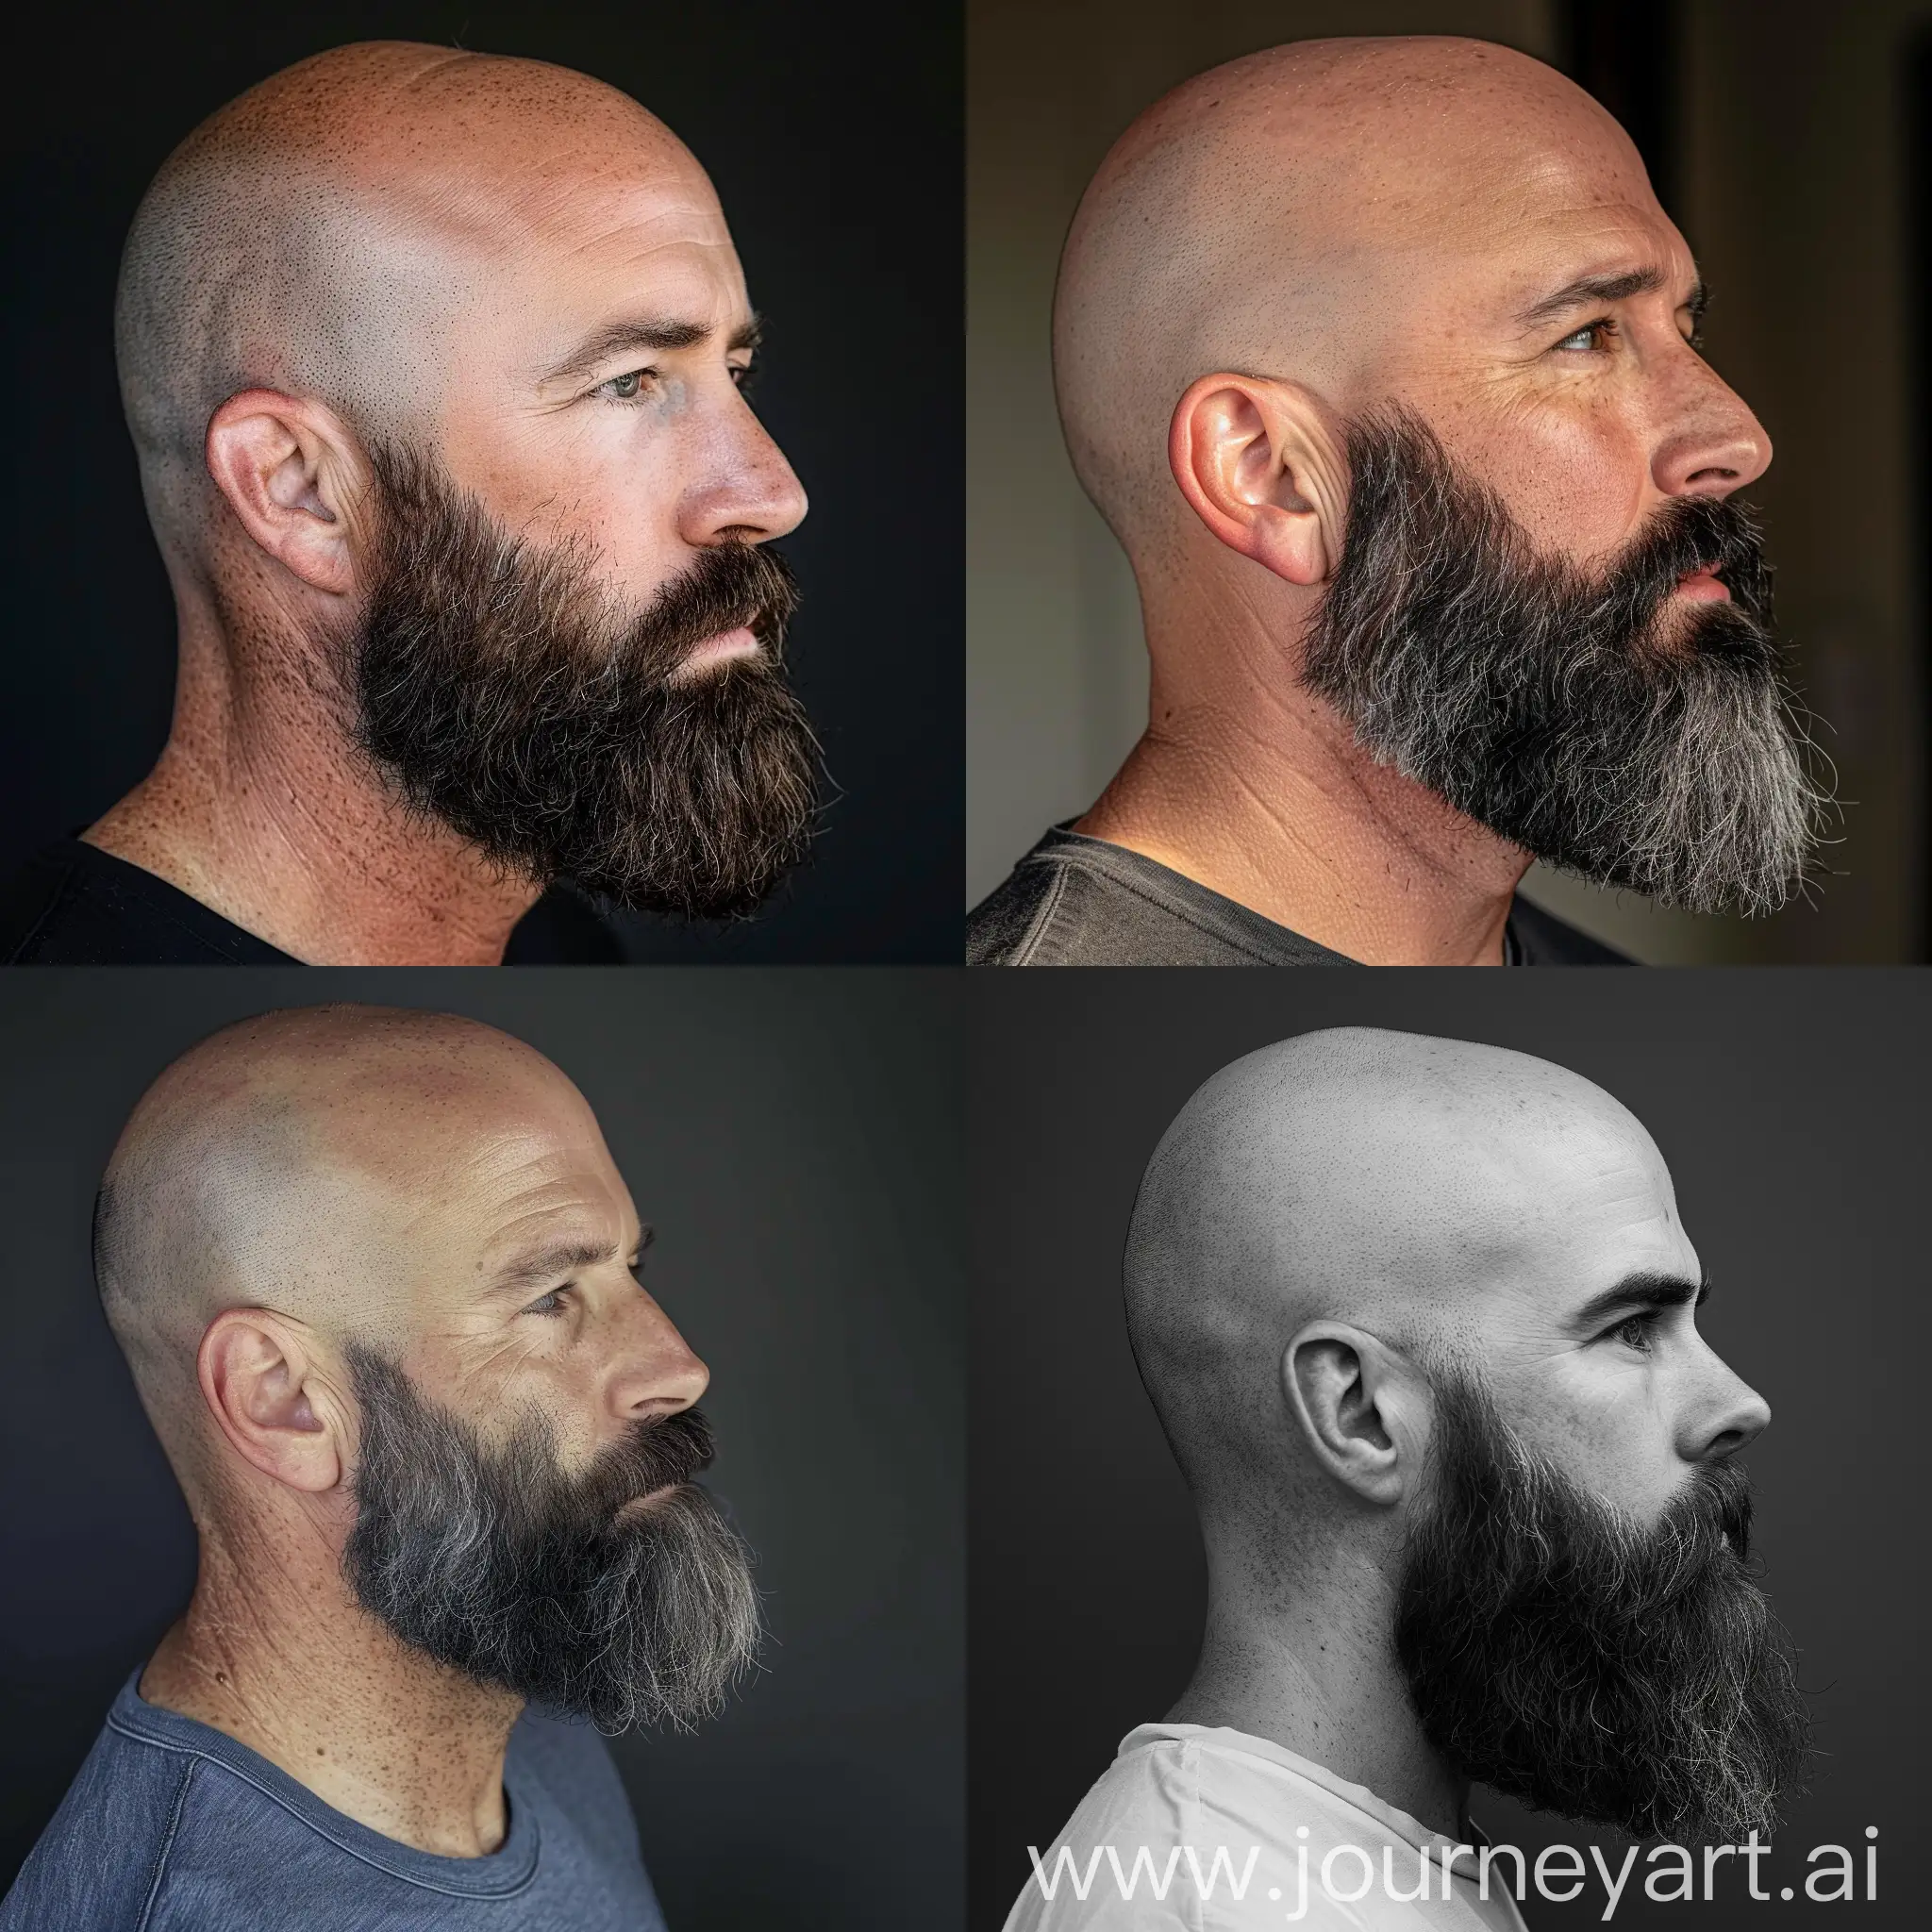 50 year old man, daddy look, medium to long length shaped dark beard, side view head shot, bald head